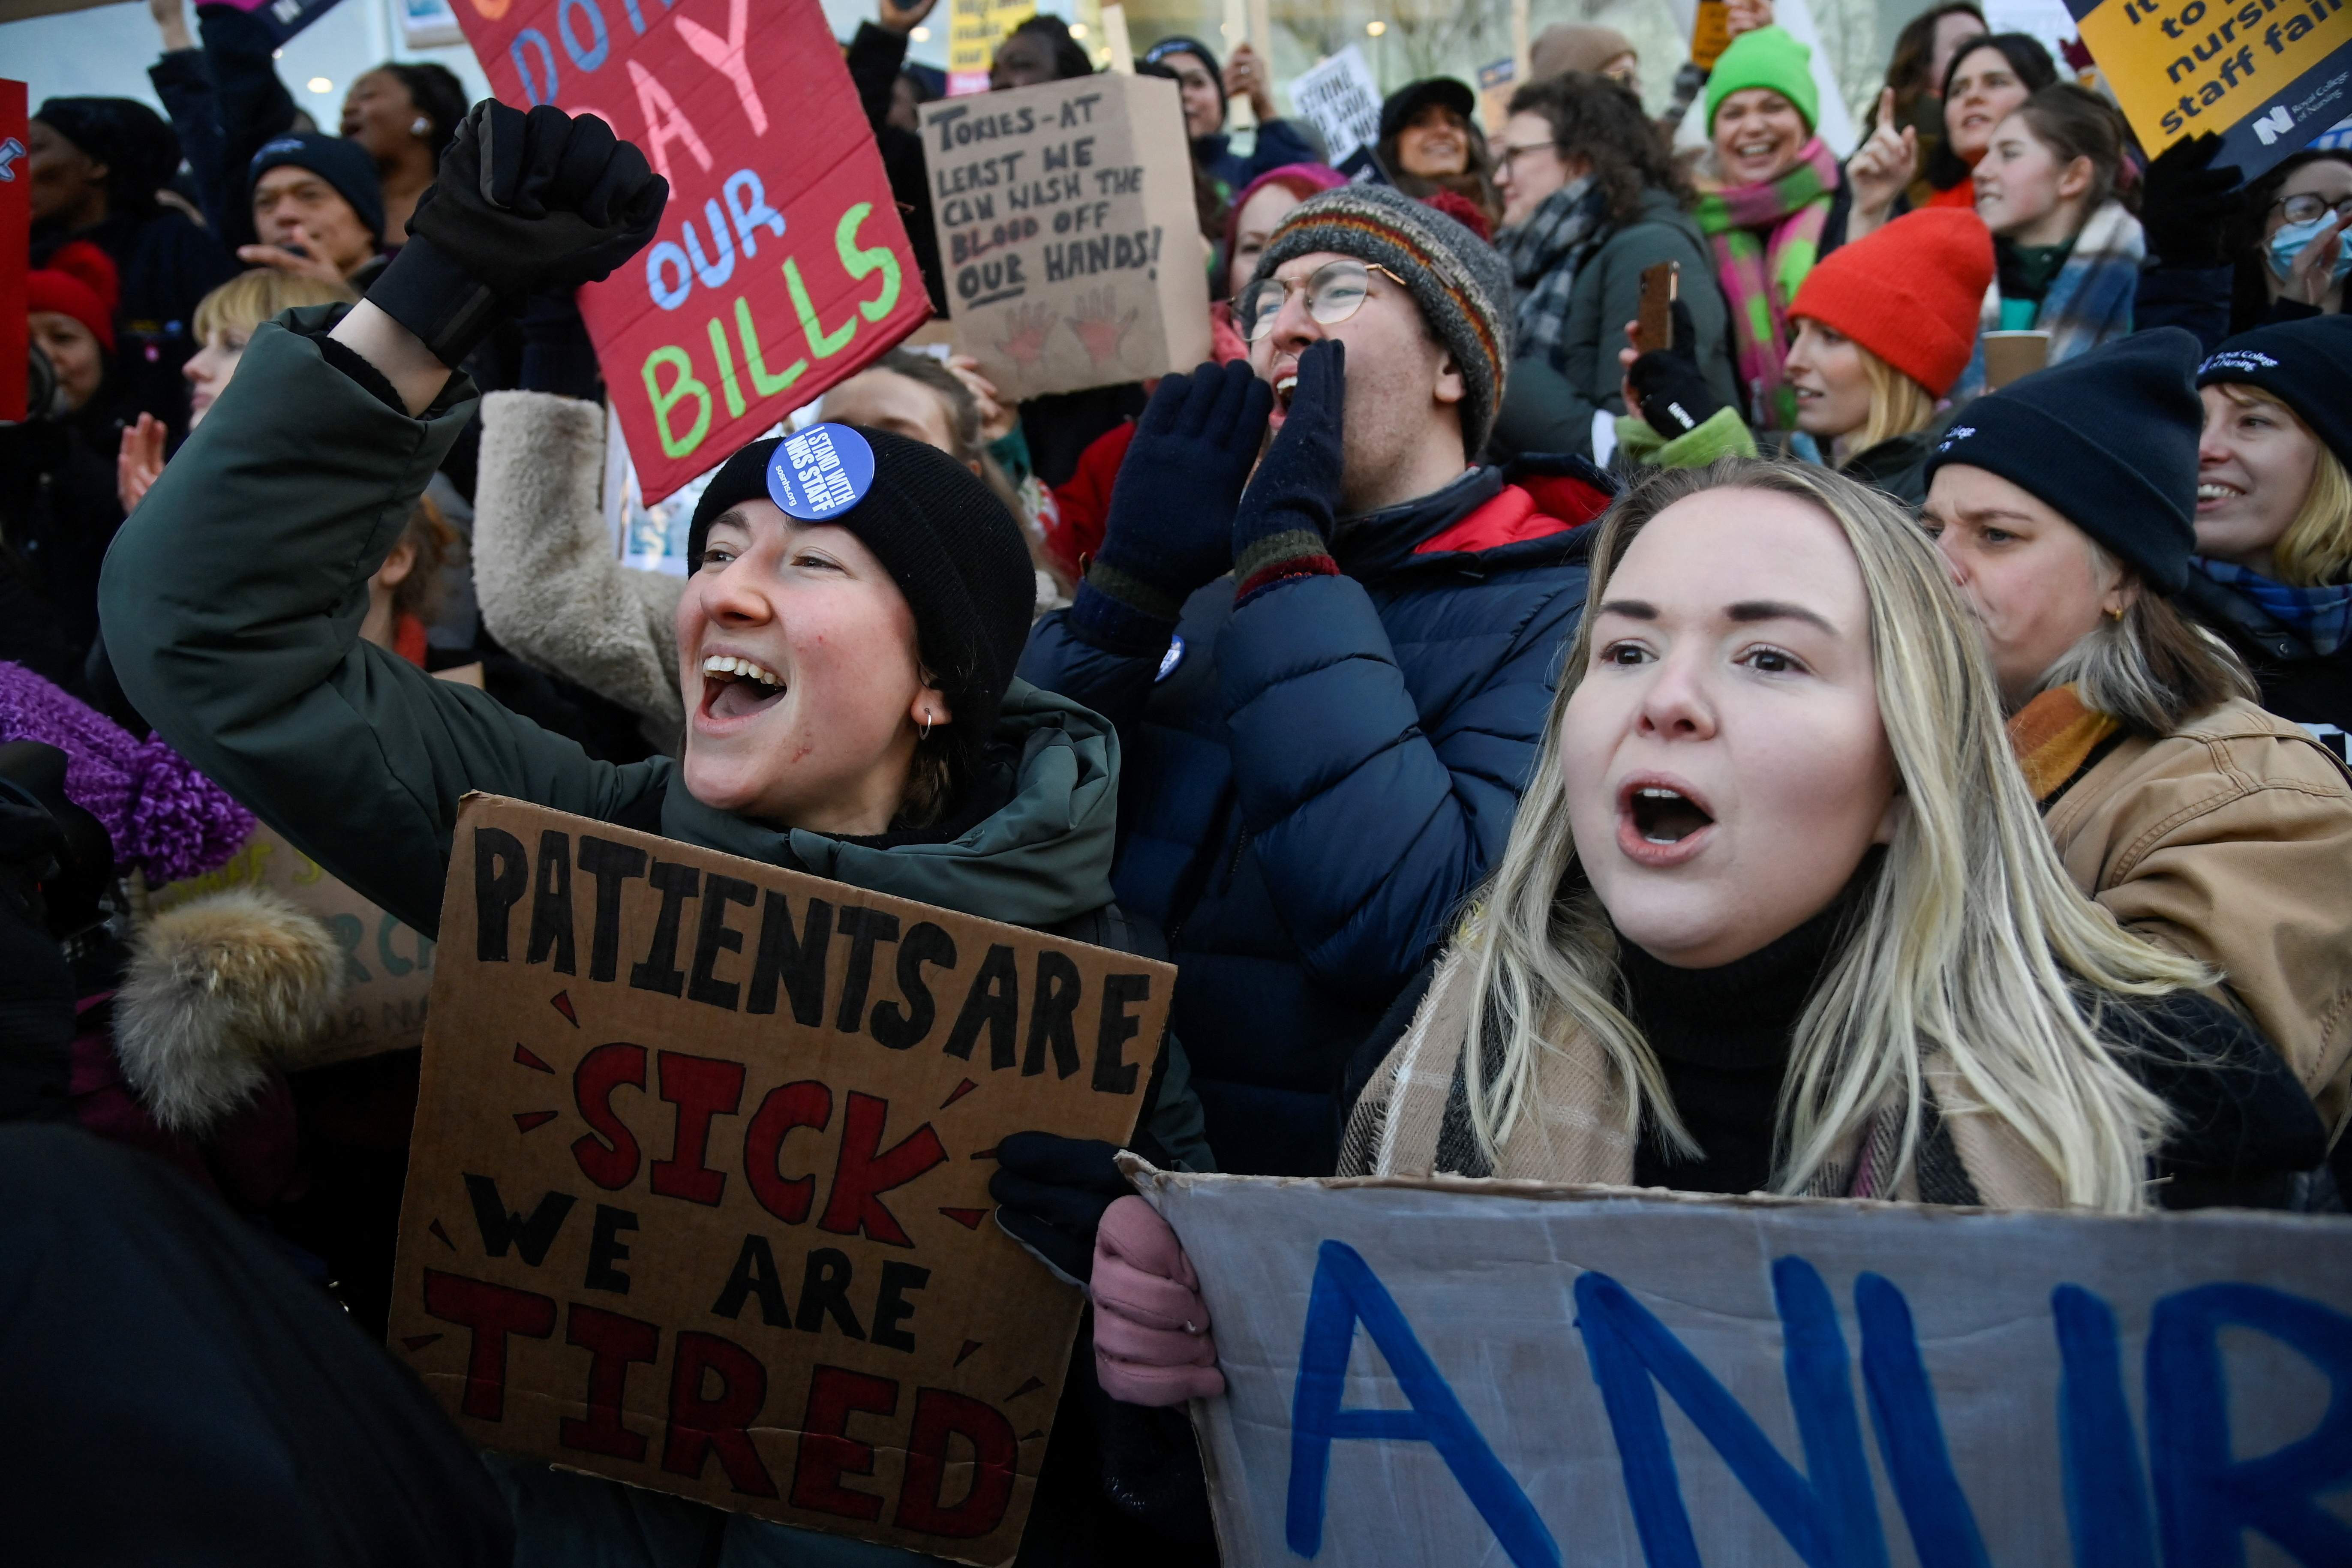 Nurses strike in London